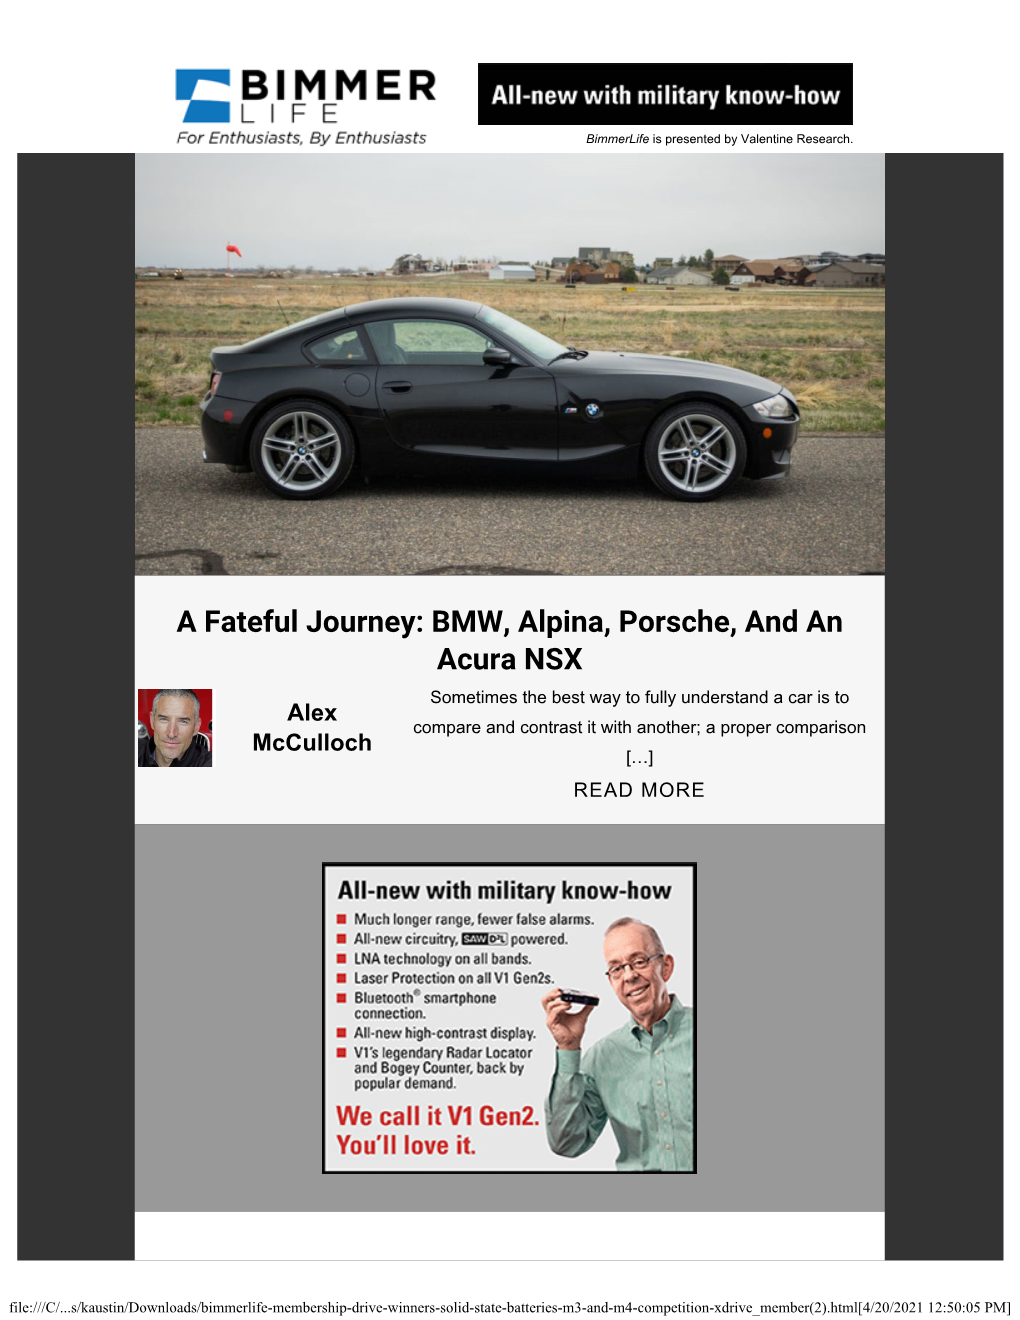 A Fateful Journey: BMW, Alpina, Porsche, and an Acura